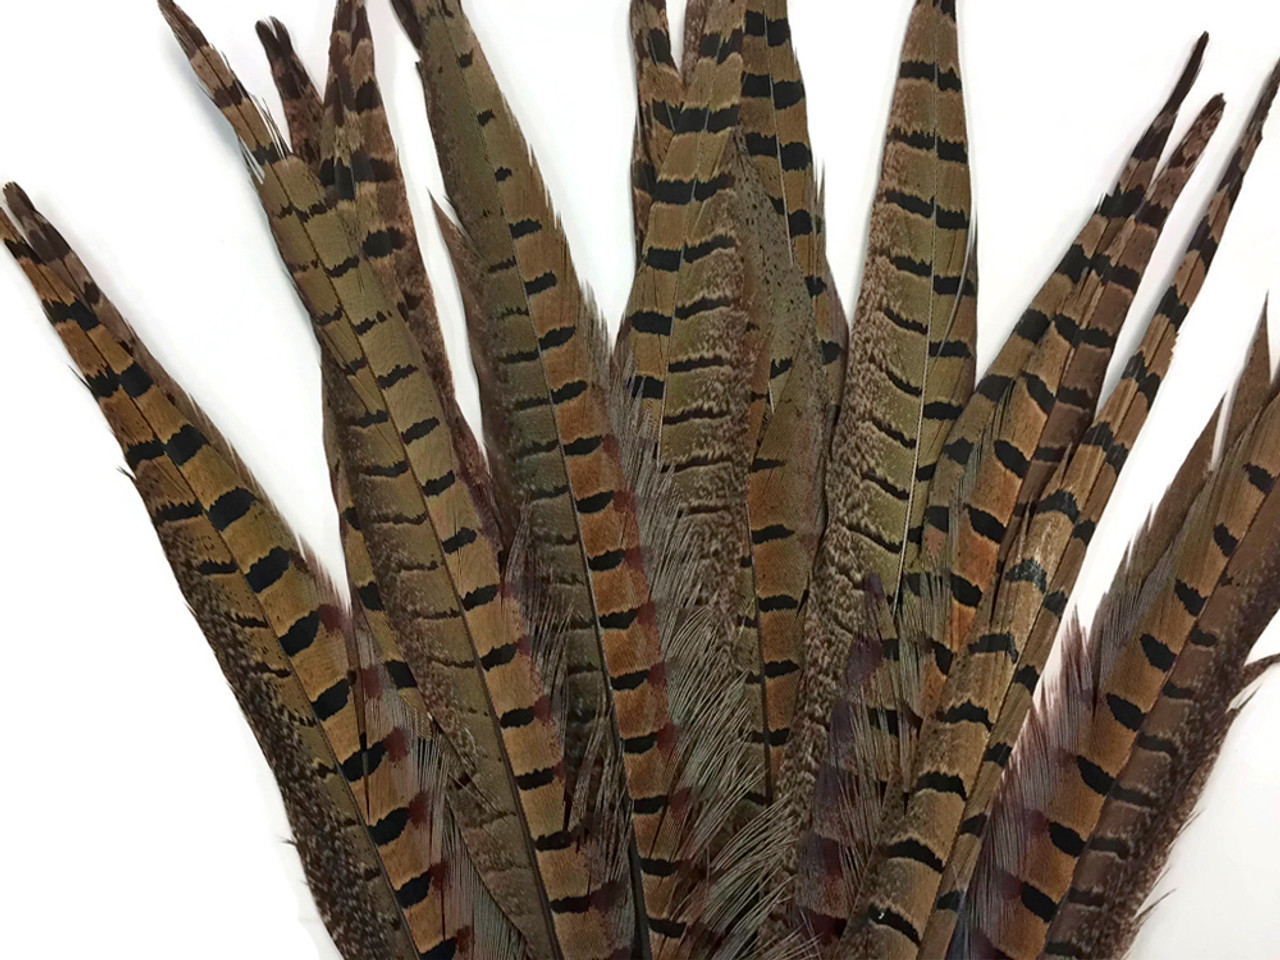  AWAYTR 20pcs Natural Pheasant Feathers - Pheasant Tail